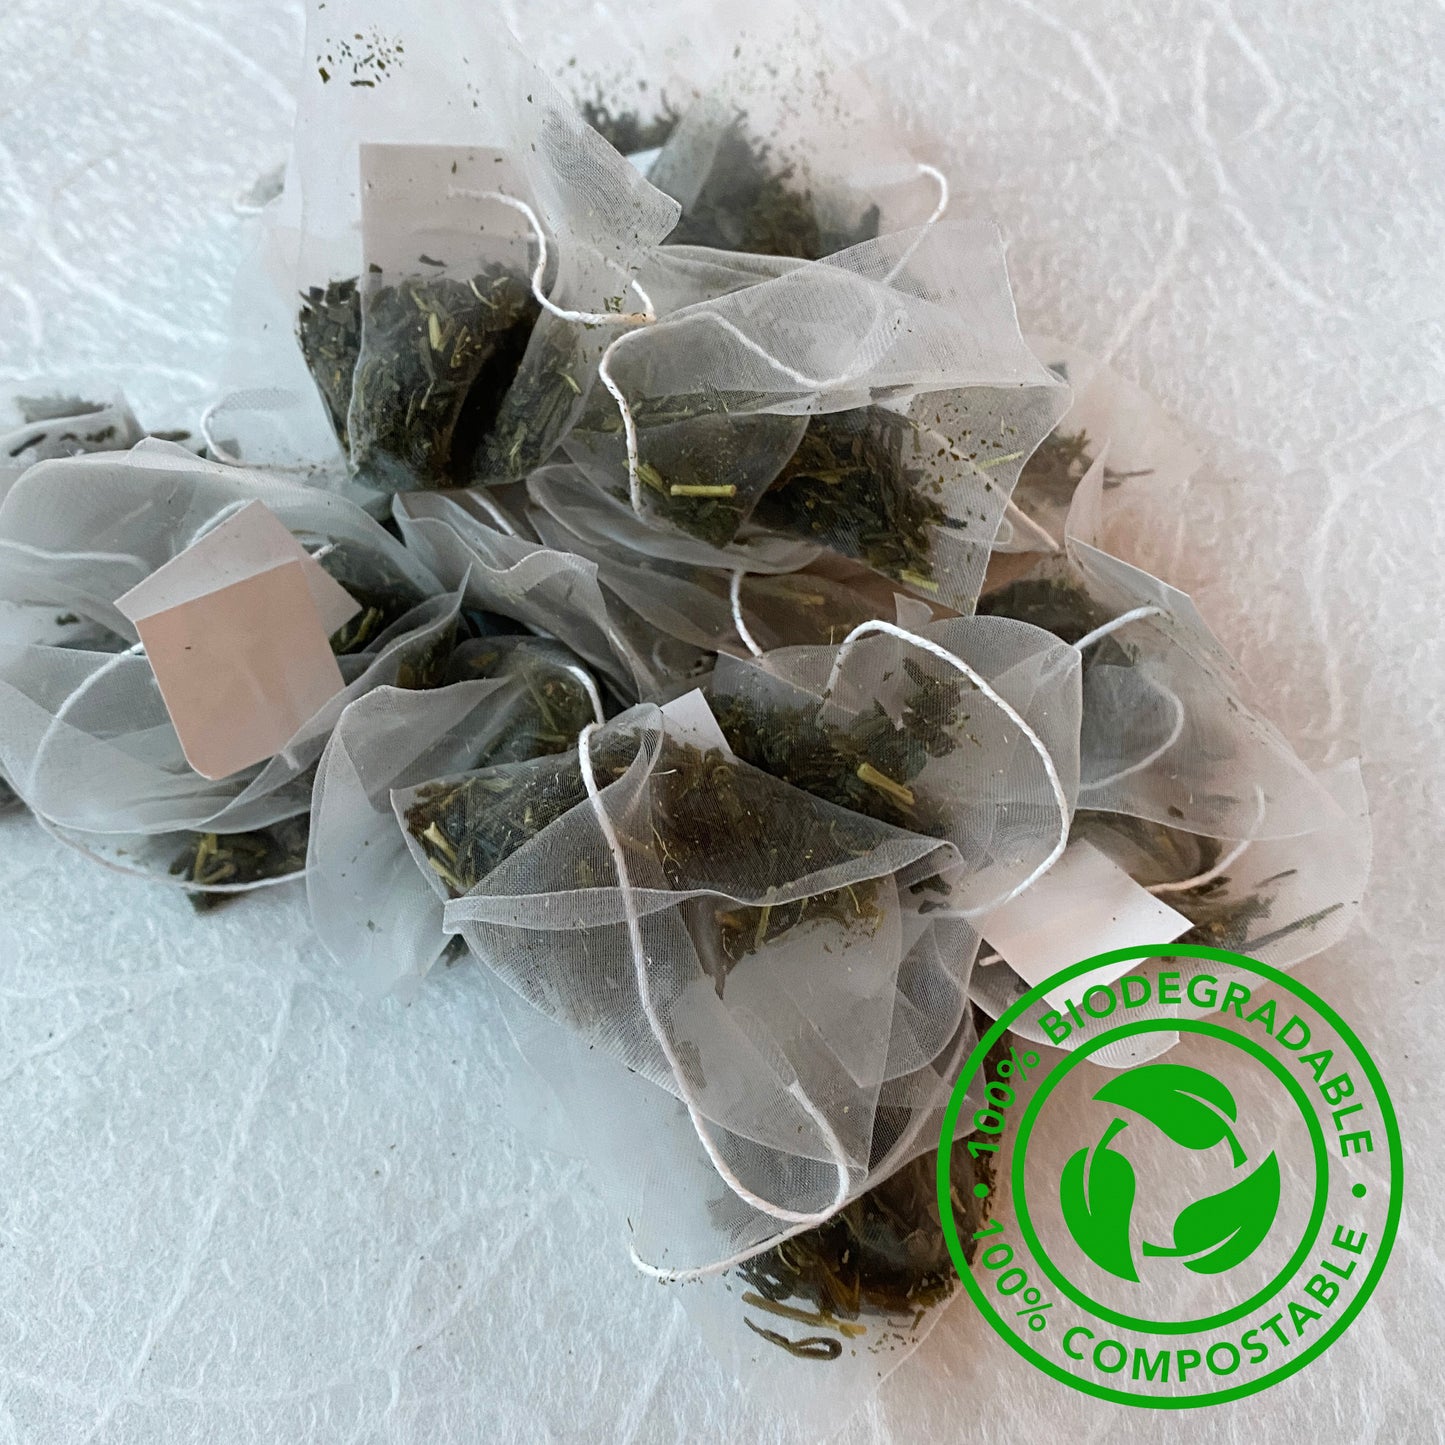 Natural Farming/Organic Premium Green Tea l 自然農法/有機 煎茶